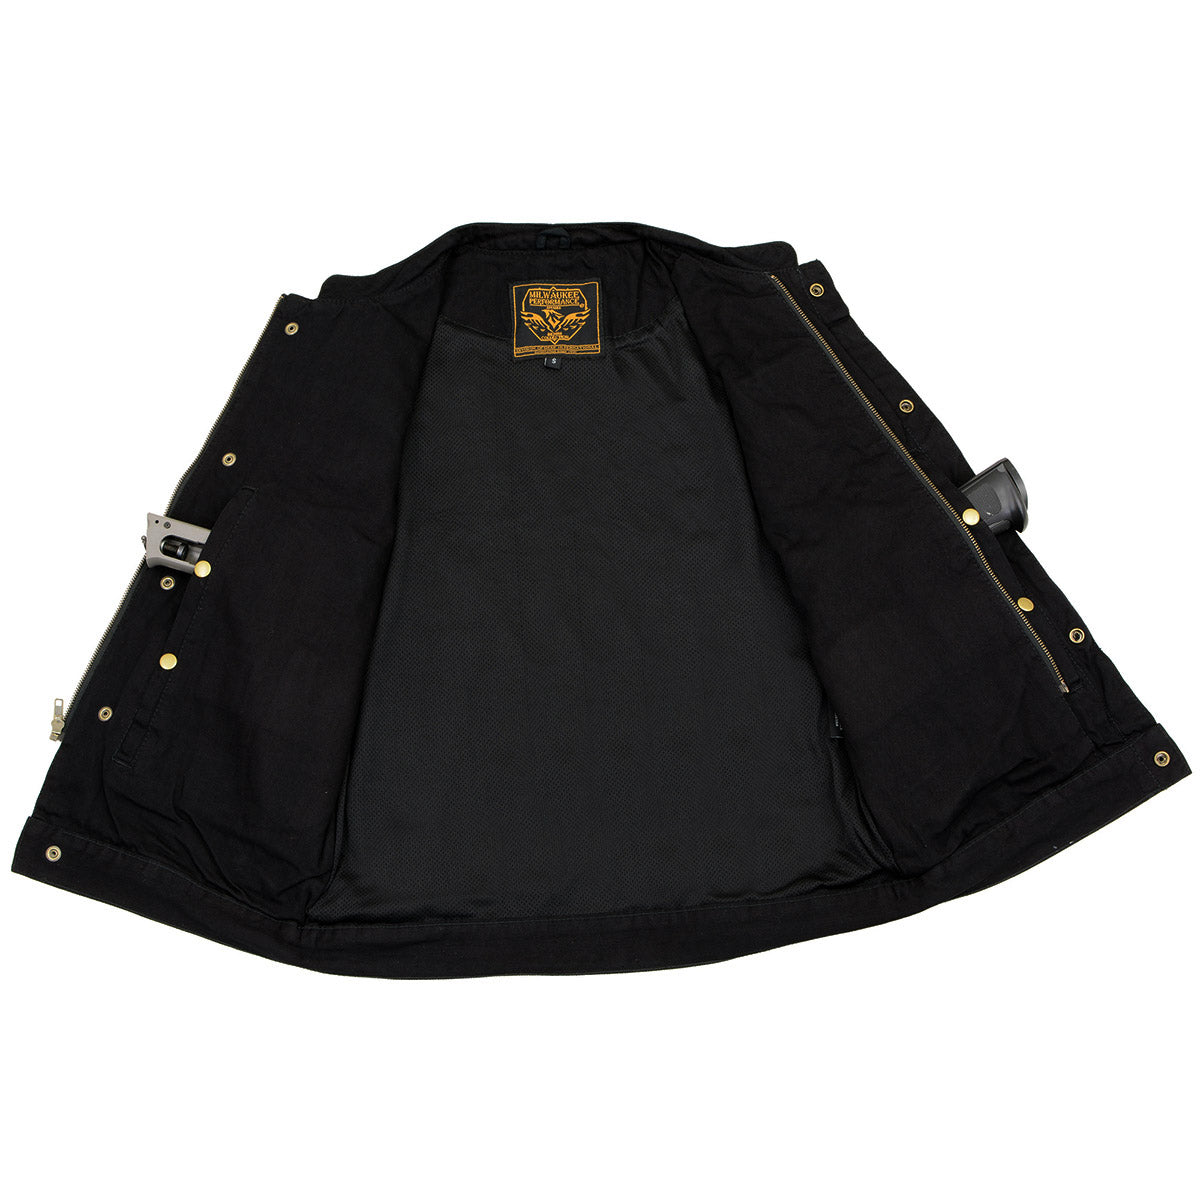 Milwaukee Leather MDM3000 Men's 'Brute' Concealed Snap Black Denim Club Style Vest w/ Hidden Zipper